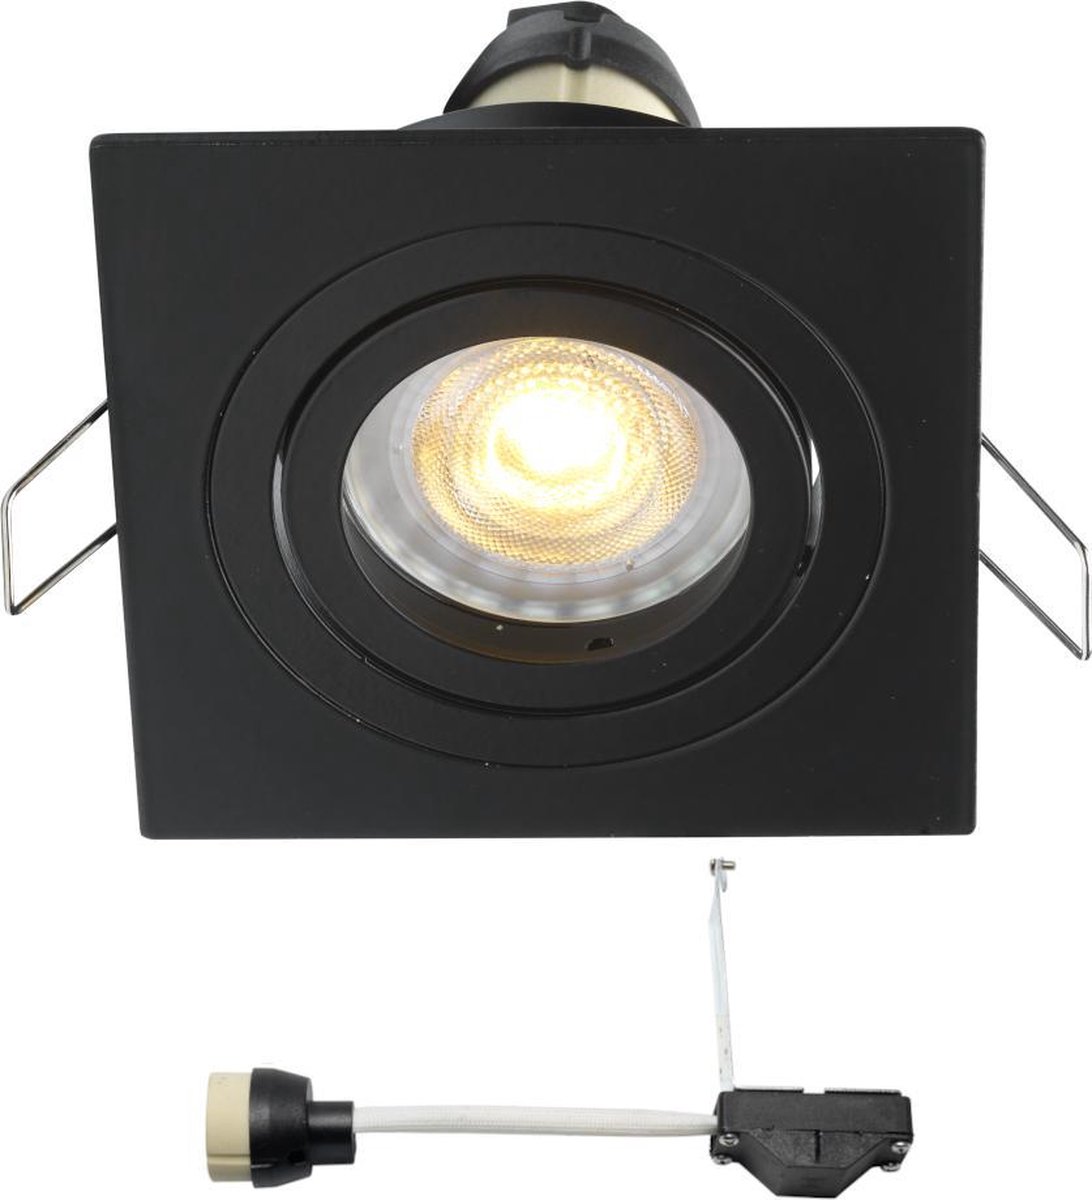 Coblux LED inbouwspot | Dimbaar | 5 wat | Warmwit licht